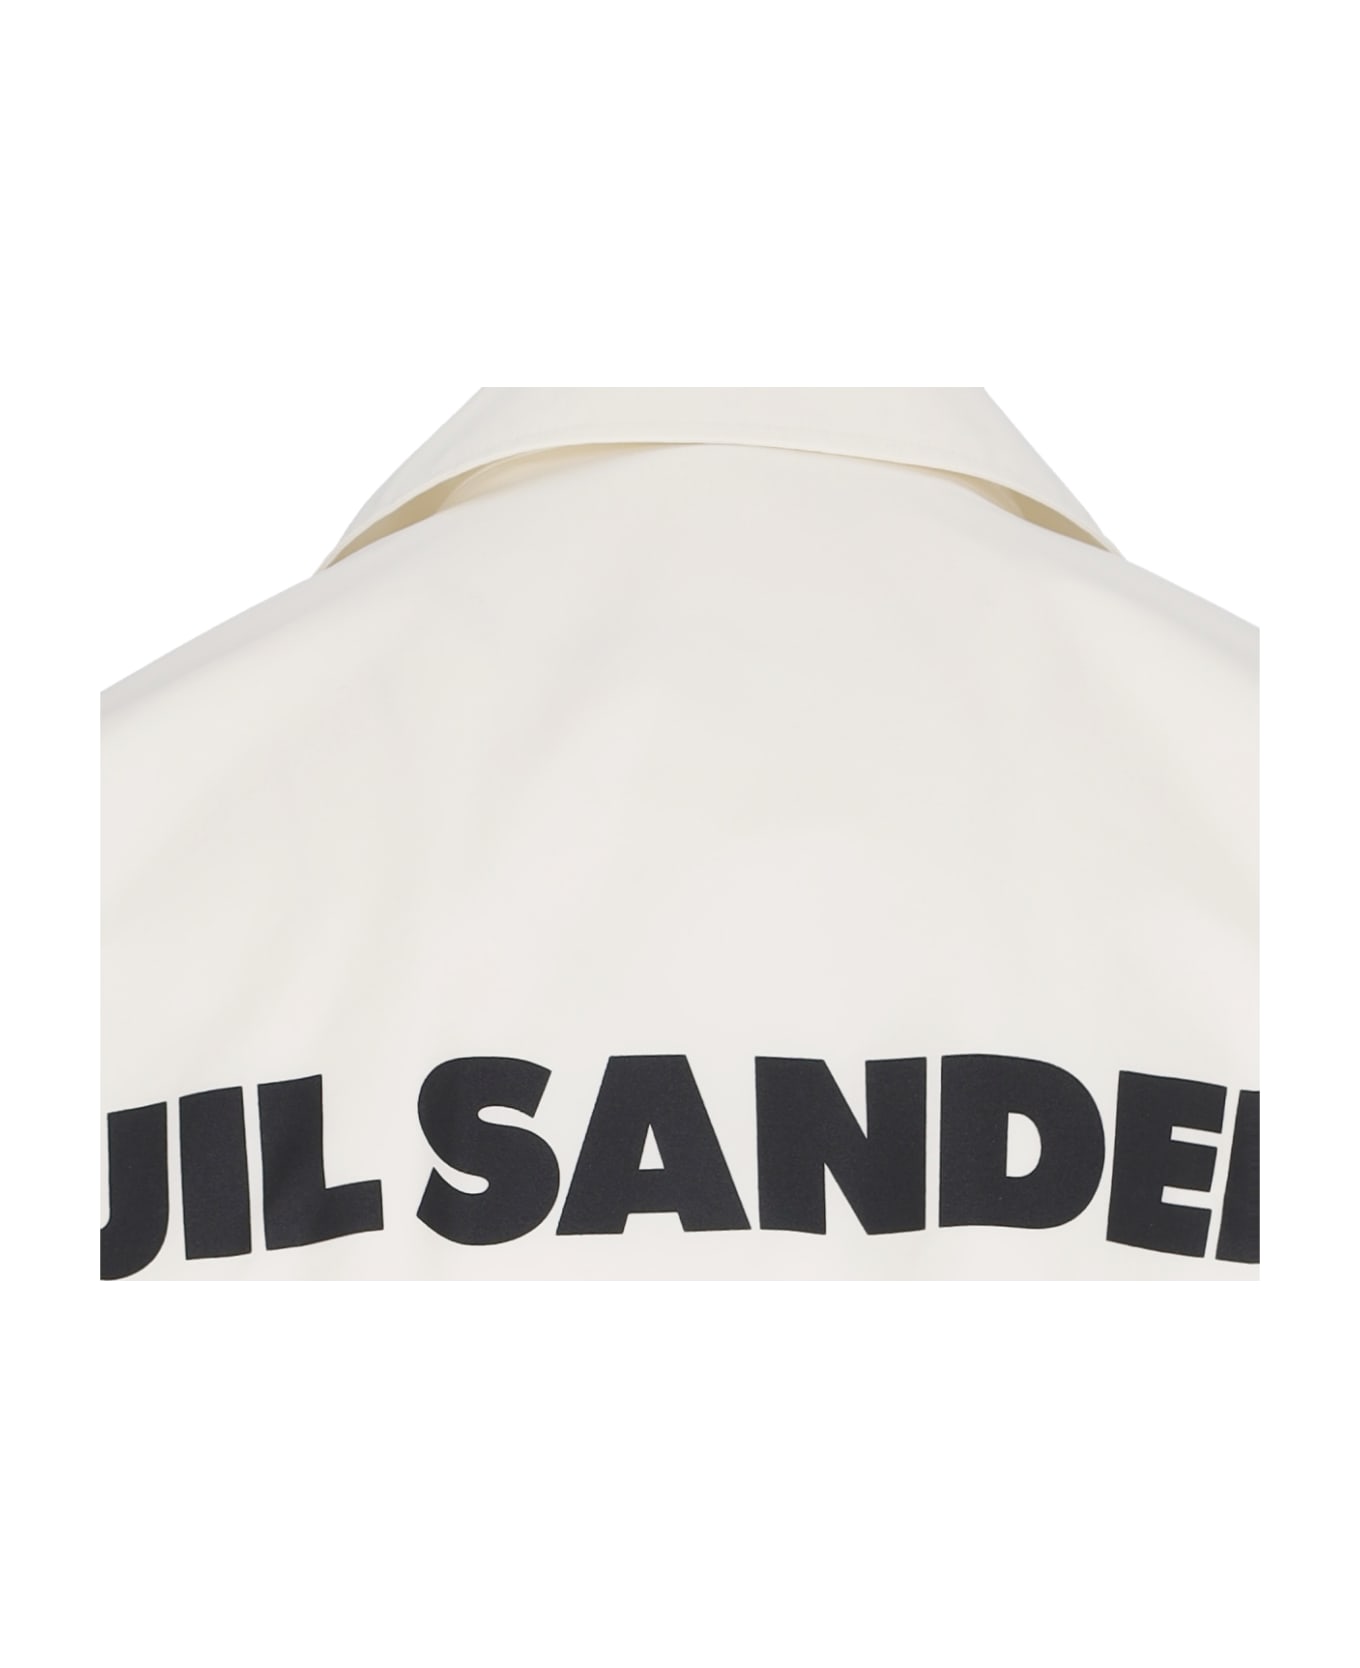 Jil Sander Back Logo Jacket - White